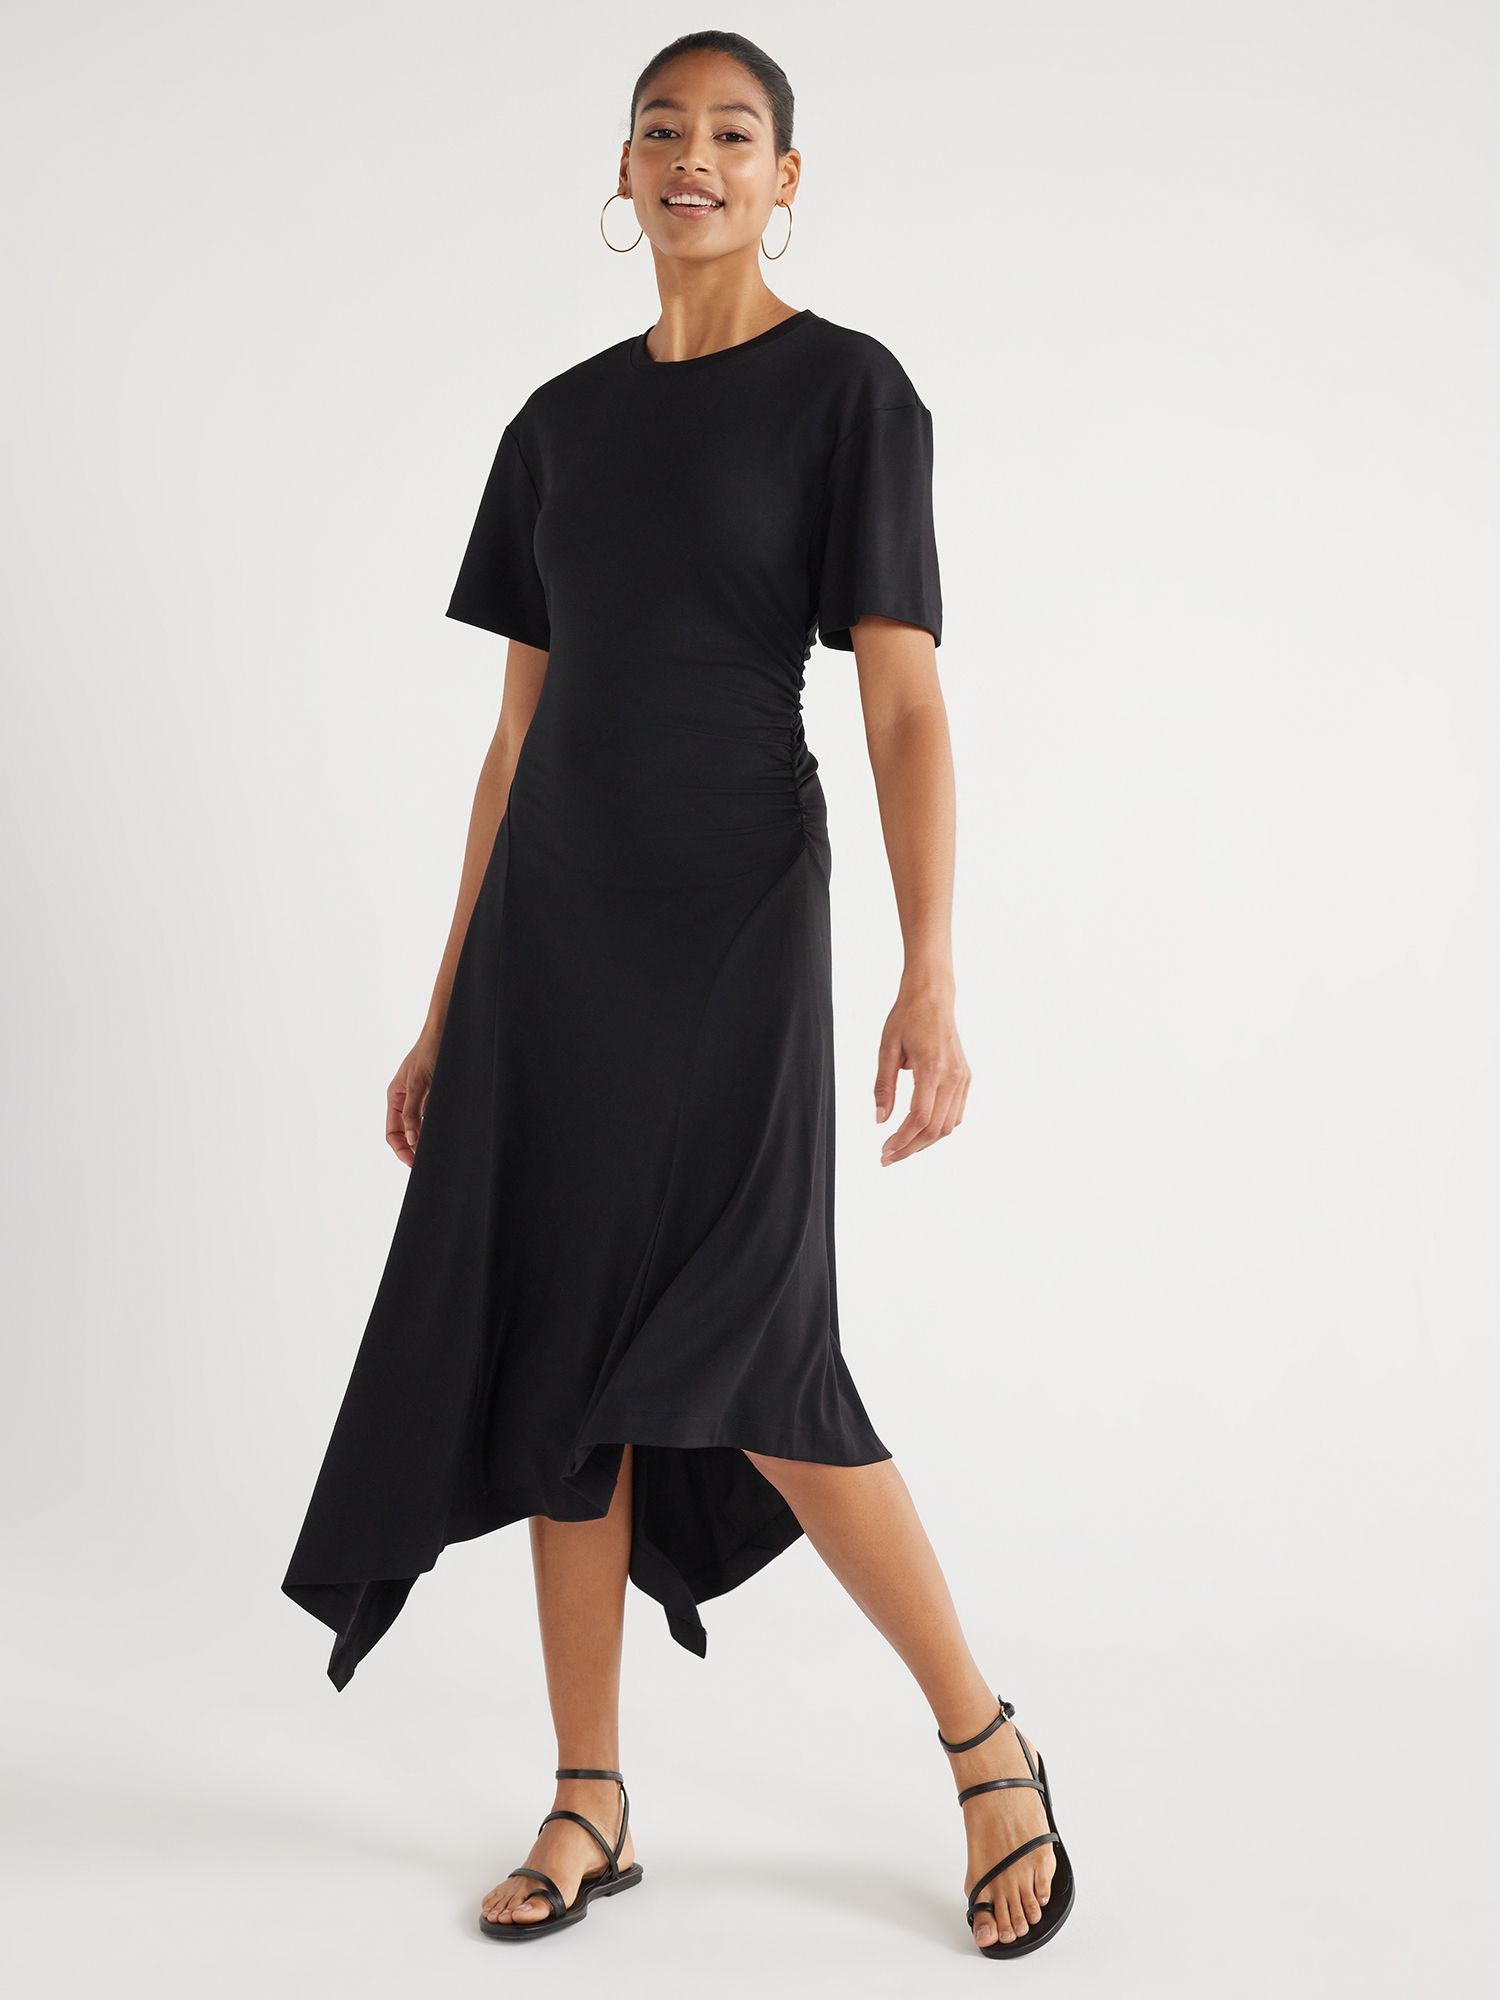 Scoop Women’s Asymmetrical Dress with Short Sleeves, XS-XXL | Walmart (US)